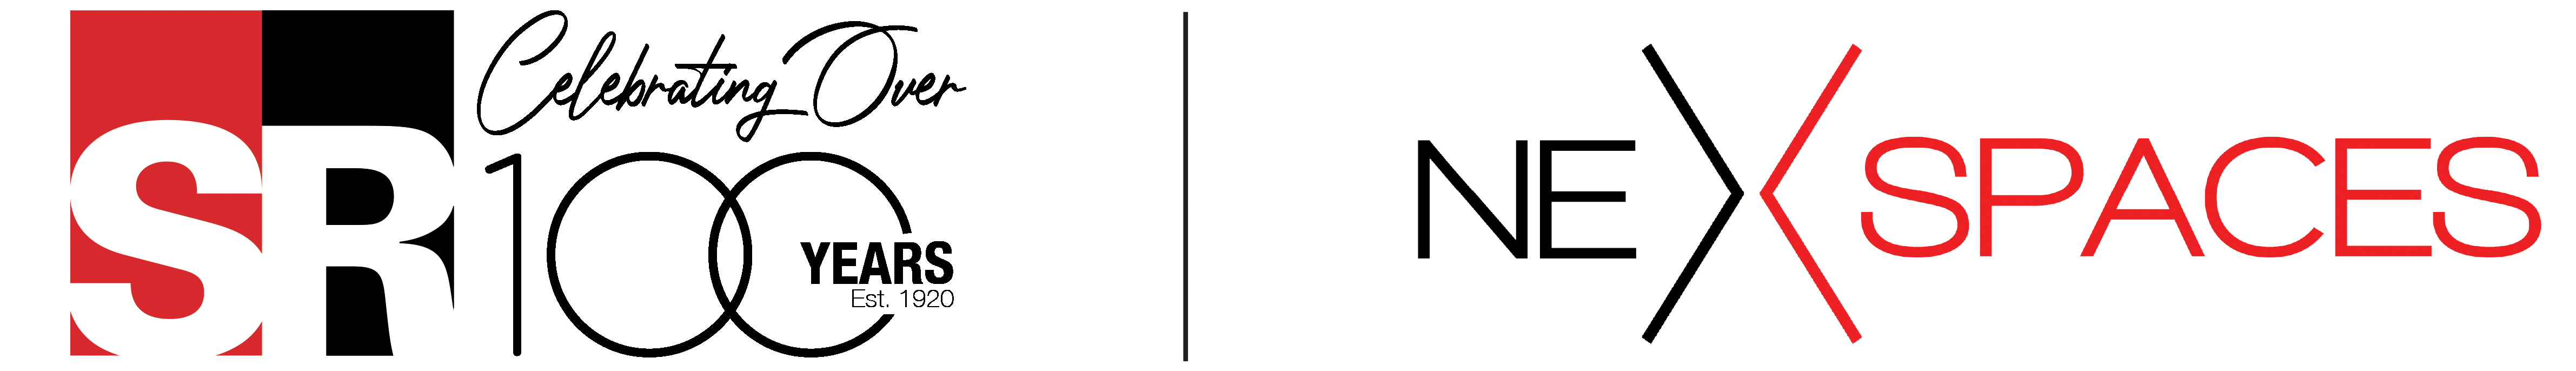 Scott Rice and NexSpaces logo